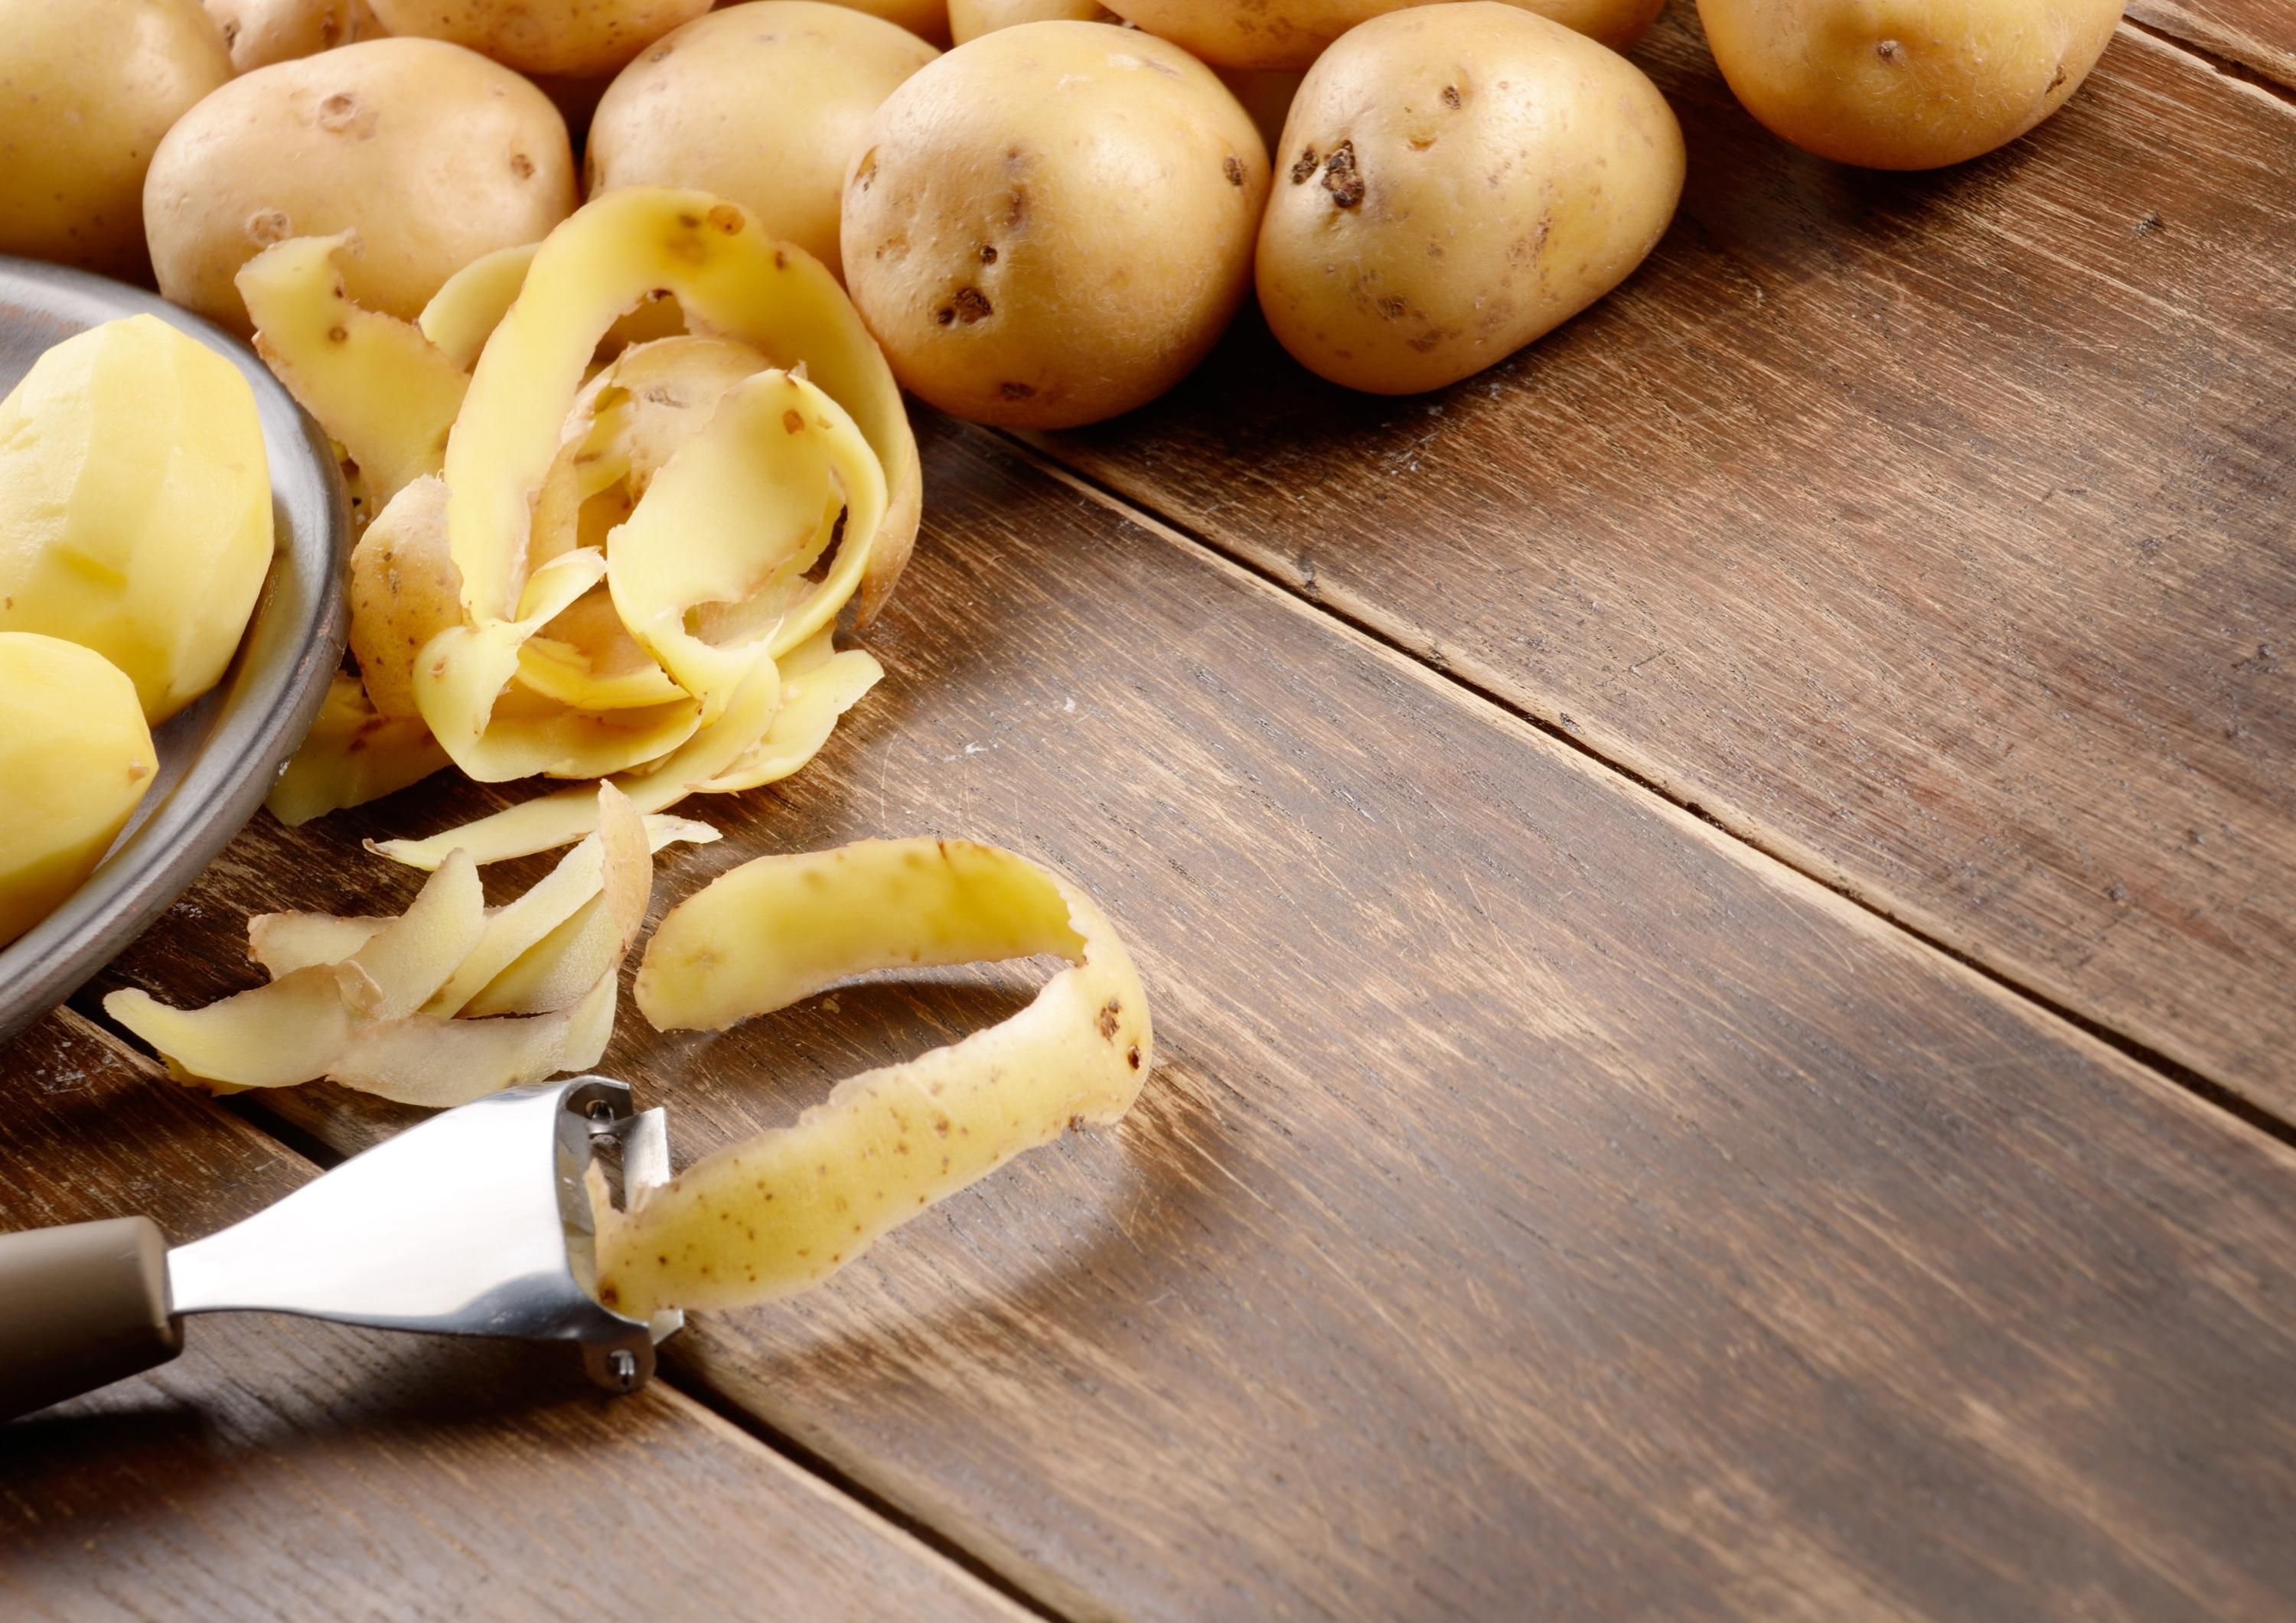 #zerowaste: how to reuse potato peels